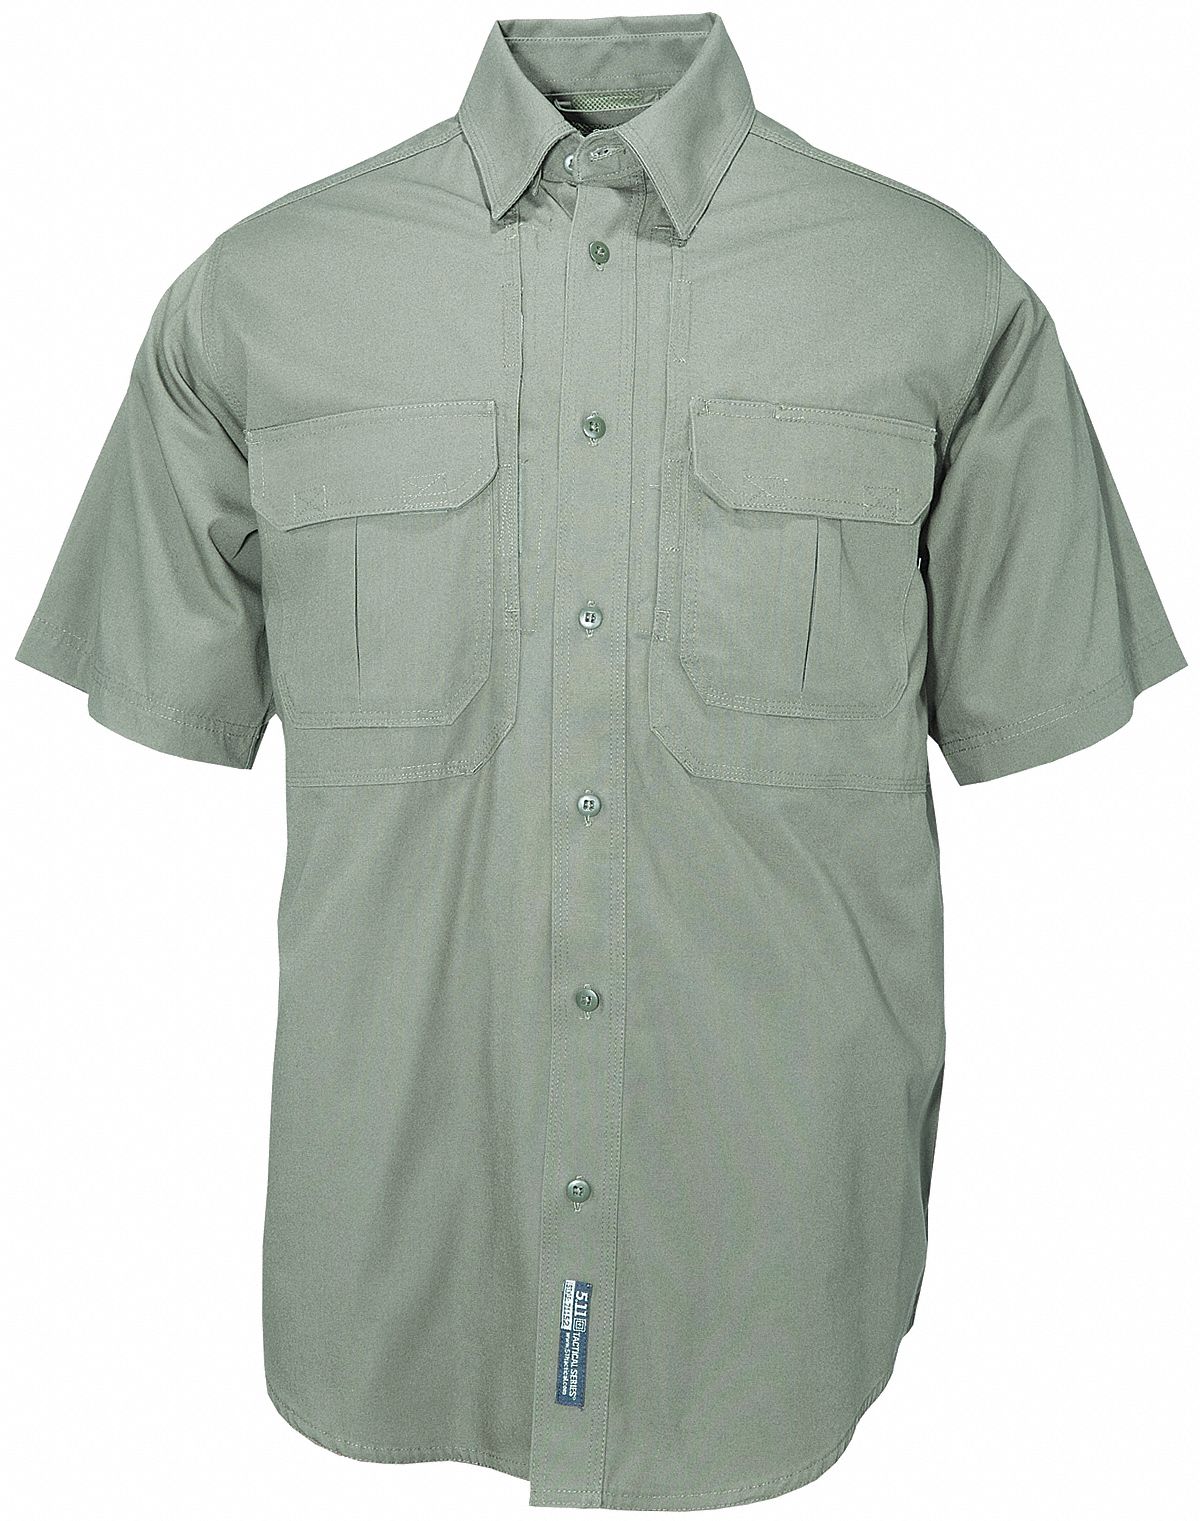 5.11 Tactical 5.11 Tactical Series Dark Green Collared Shirt Mens 2XL Short Sleeve 100% Cotton 